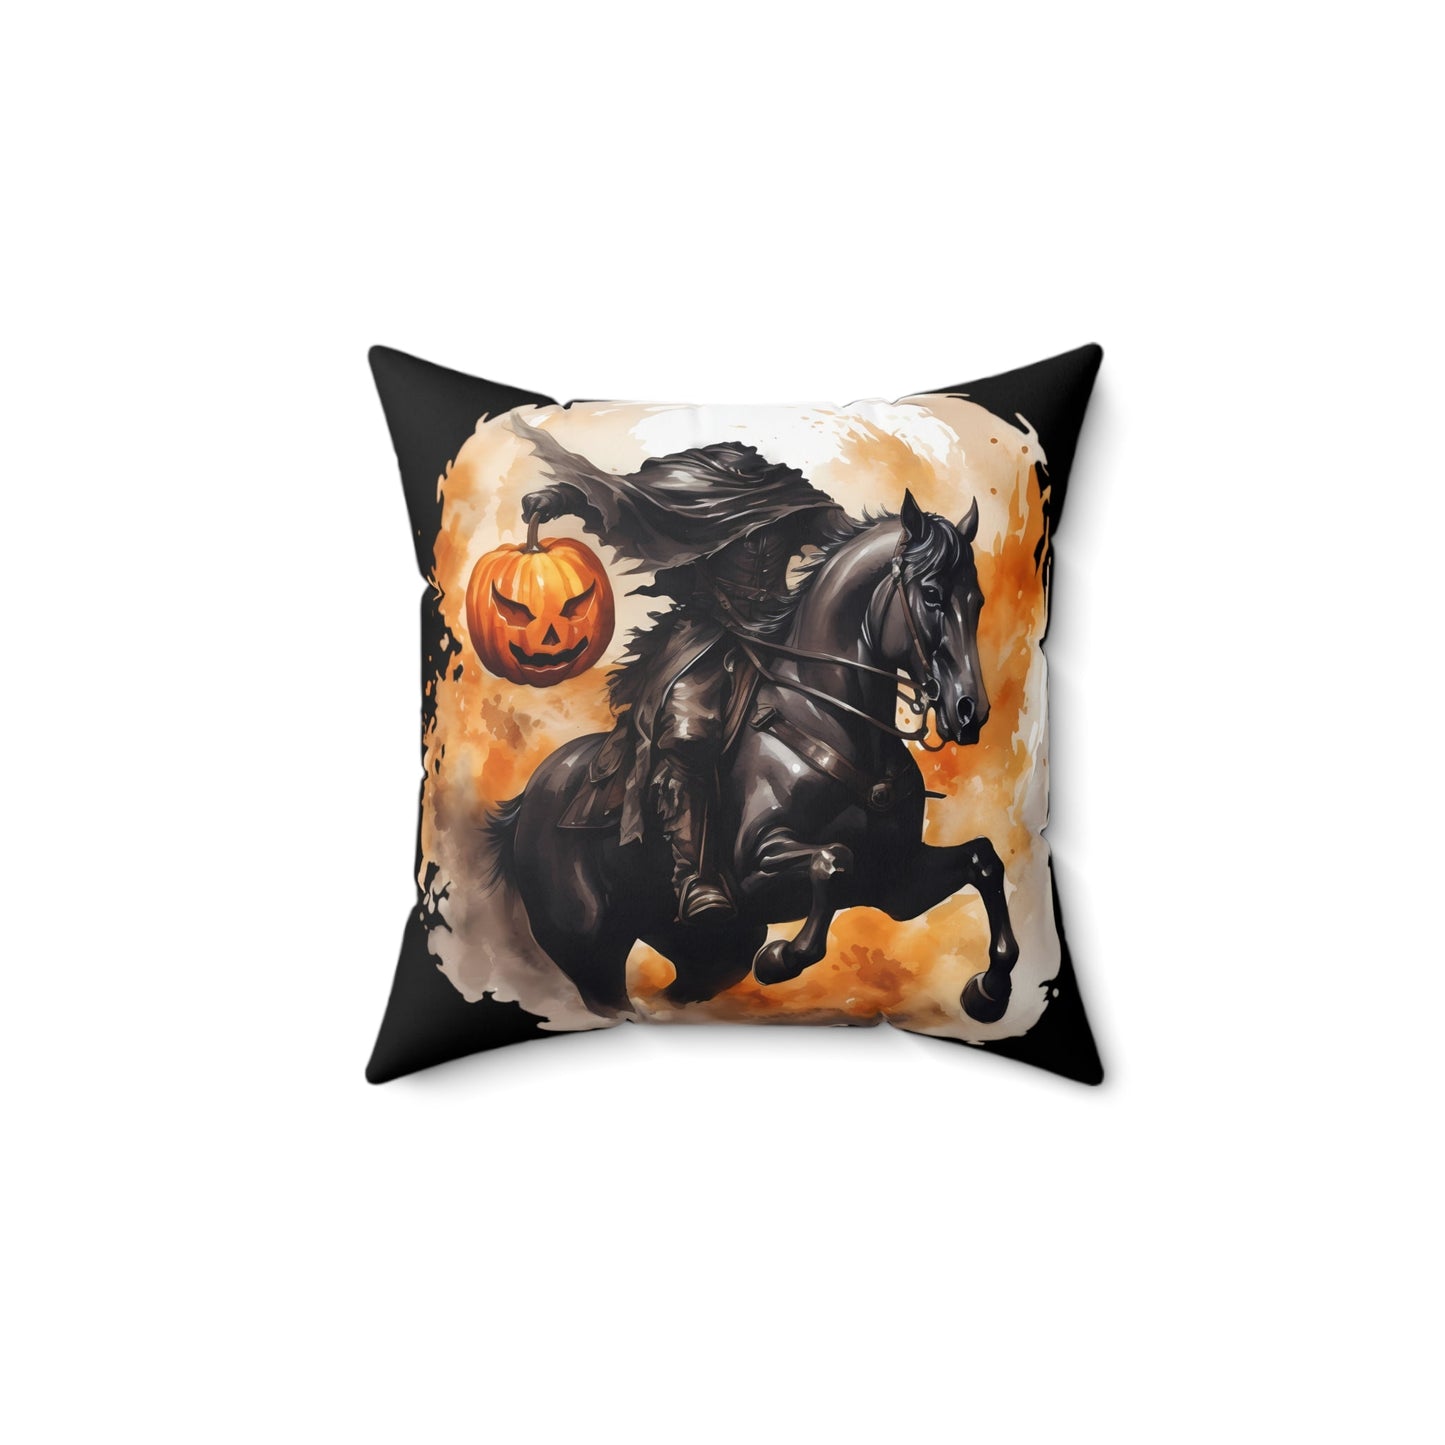 Headless Horseman Pumpkin Head Square Throw PillowHome DecorVTZdesigns14" × 14"All Over PrintAOPBed